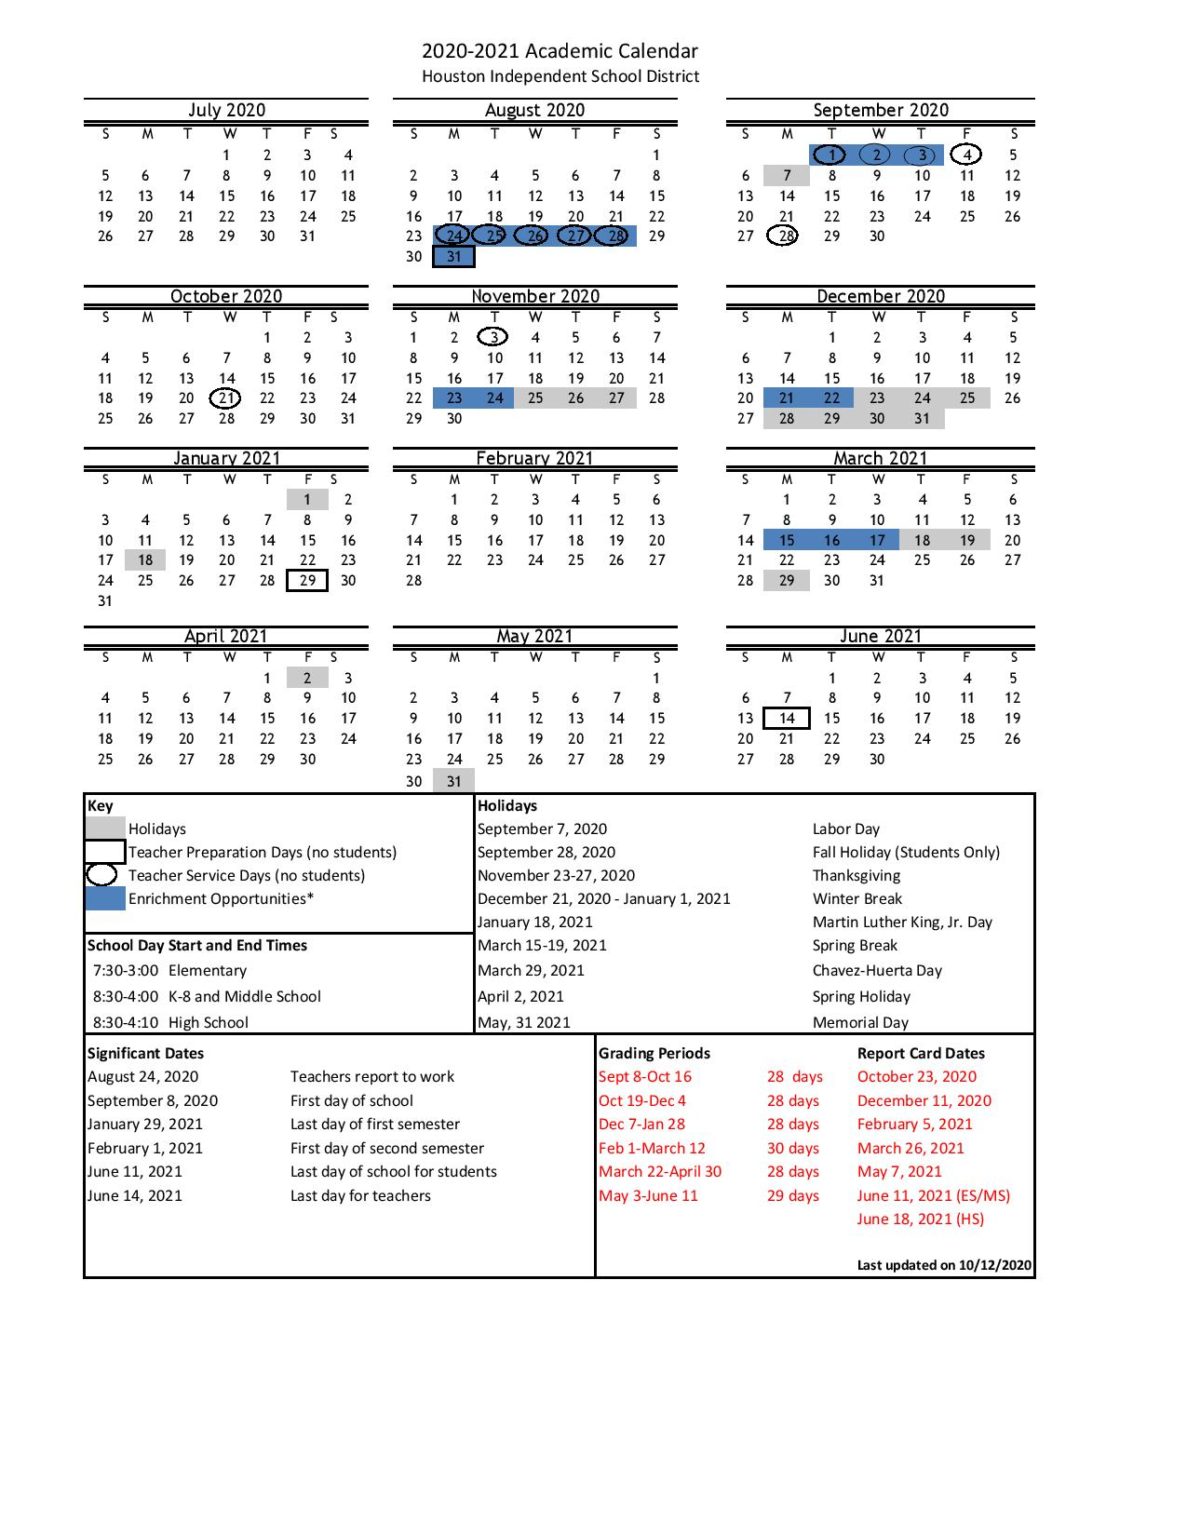 Houston Independent School District Calendar 20202021